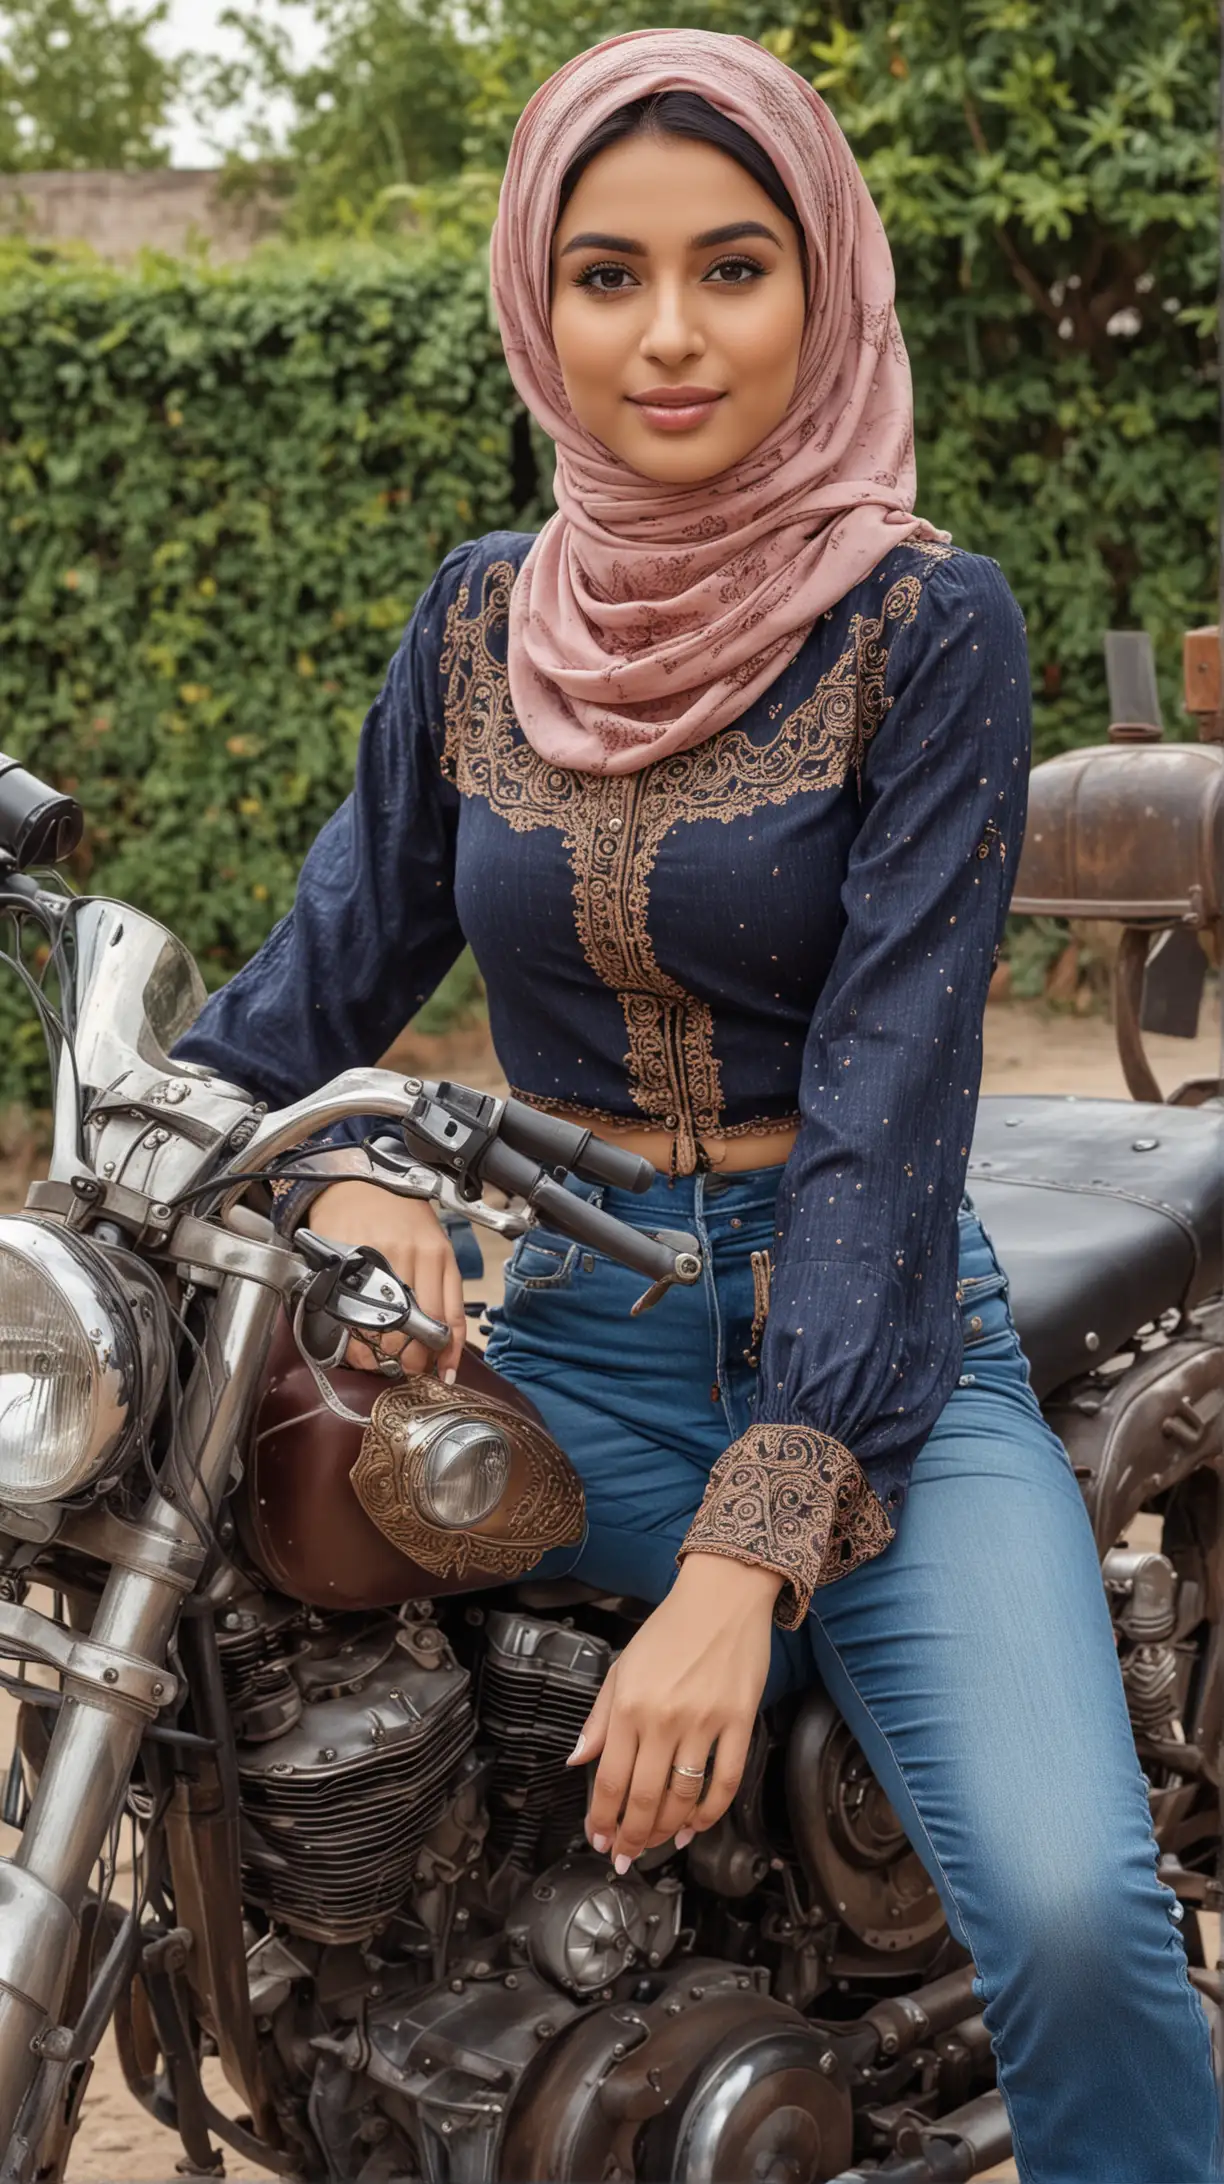 Perempuan cantik berhijab berbaju seksi dan celana jeans sedang duduk di motorcycle antik 